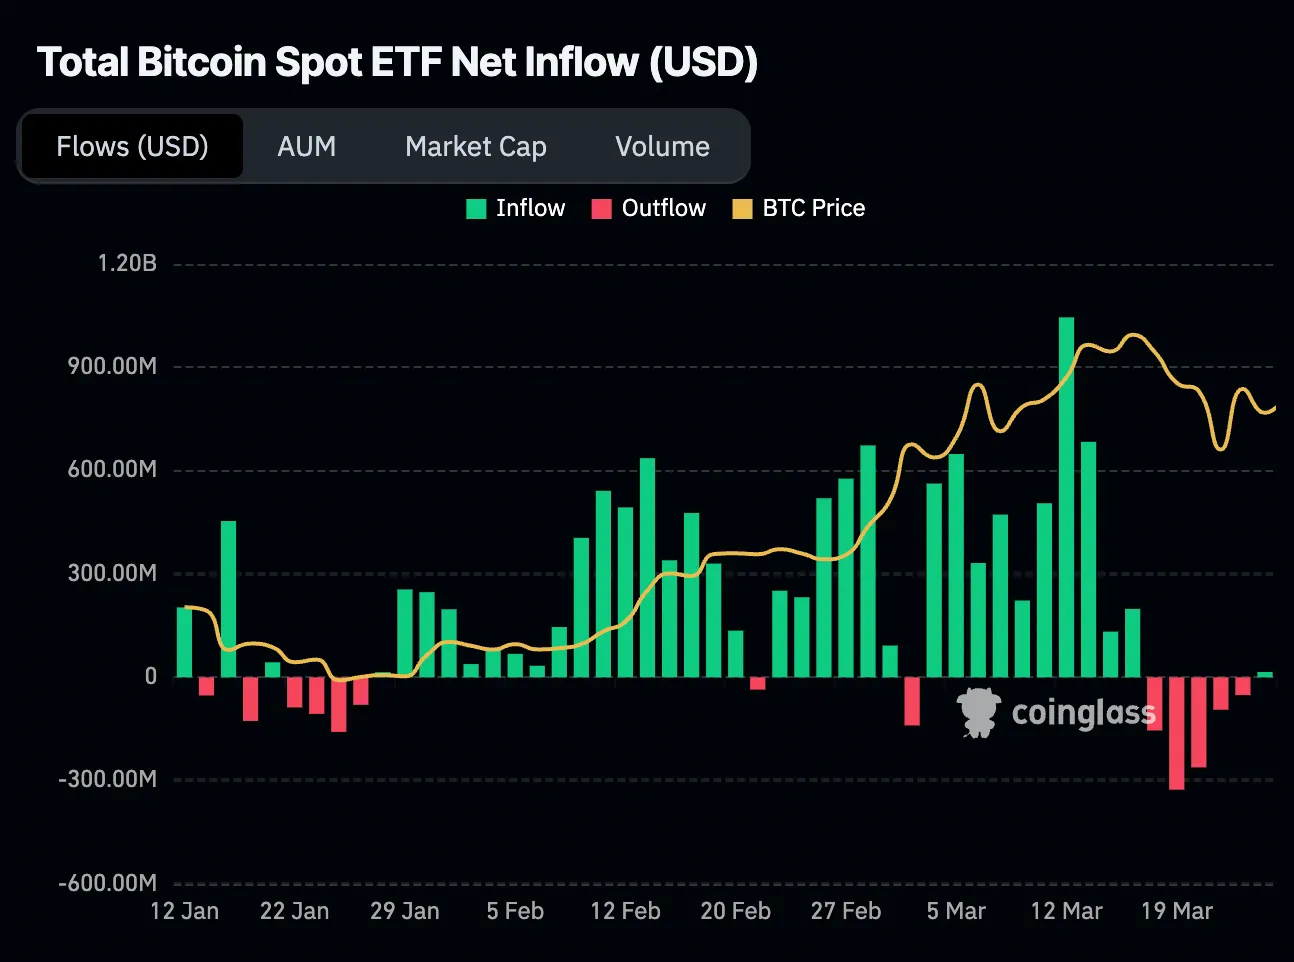 spot bitcoin etf net inflows in usd